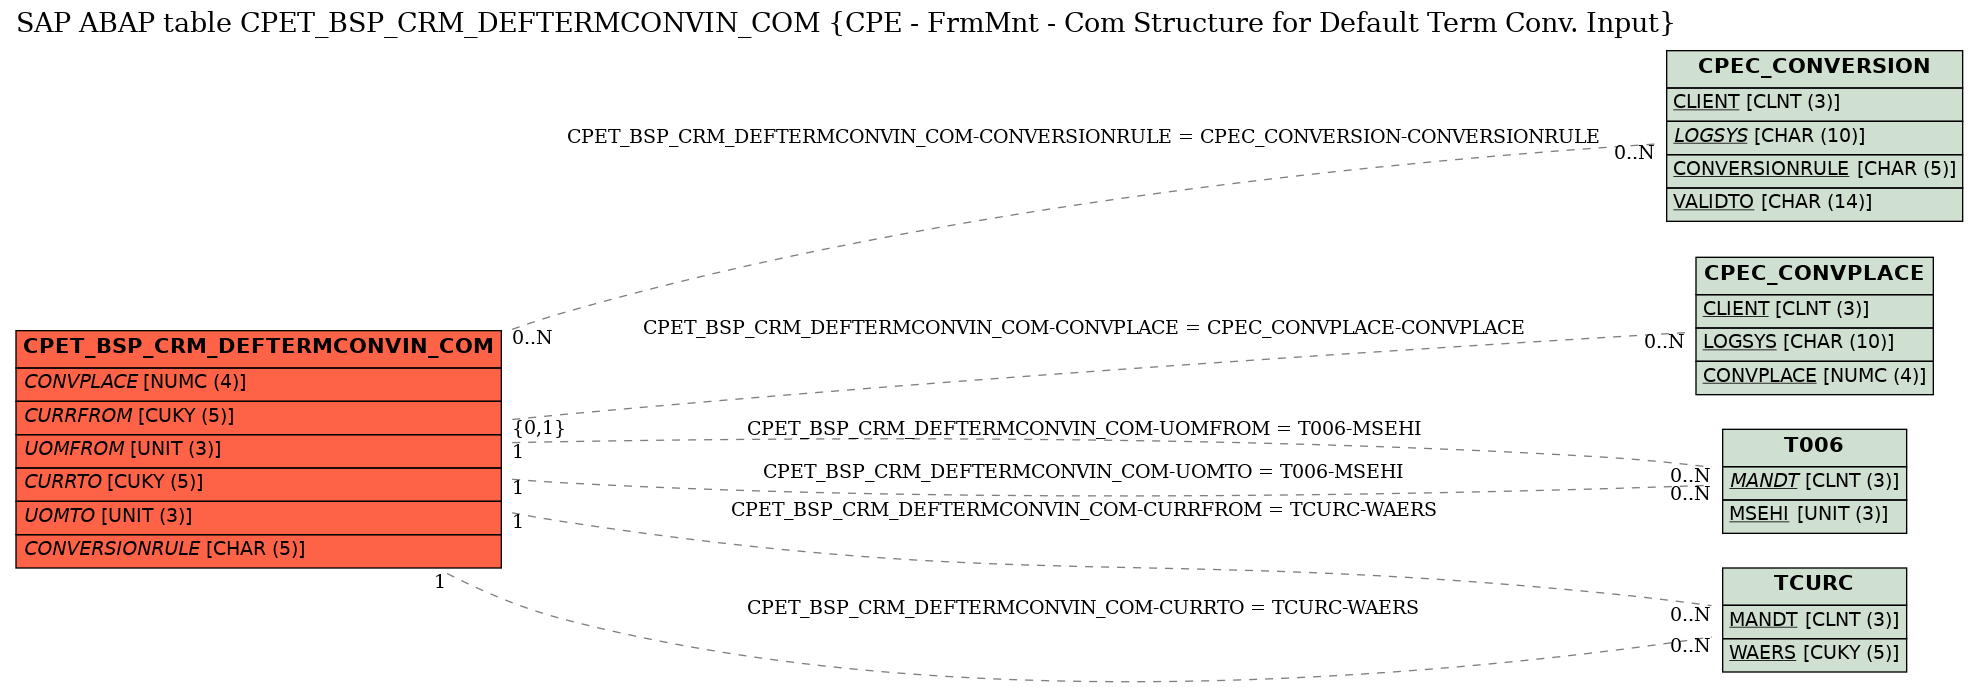 E-R Diagram for table CPET_BSP_CRM_DEFTERMCONVIN_COM (CPE - FrmMnt - Com Structure for Default Term Conv. Input)